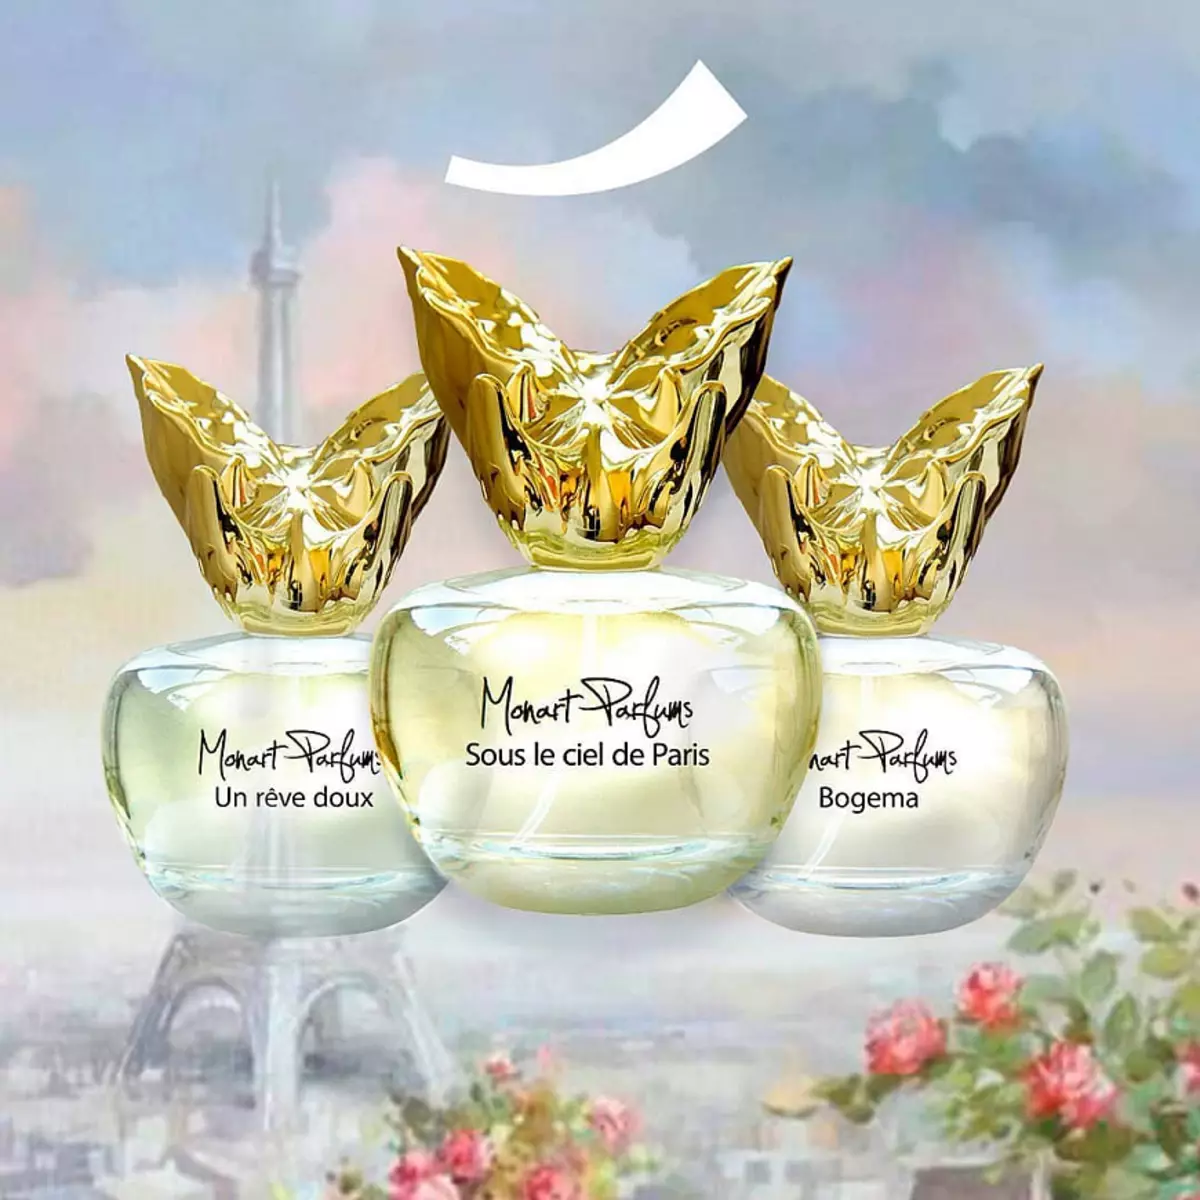 Perfumes Monart Parfums: UN MOBE Doux, Delice de la vie sy fanahy hafa, fitsipi-pifidianana voafantina 25187_6